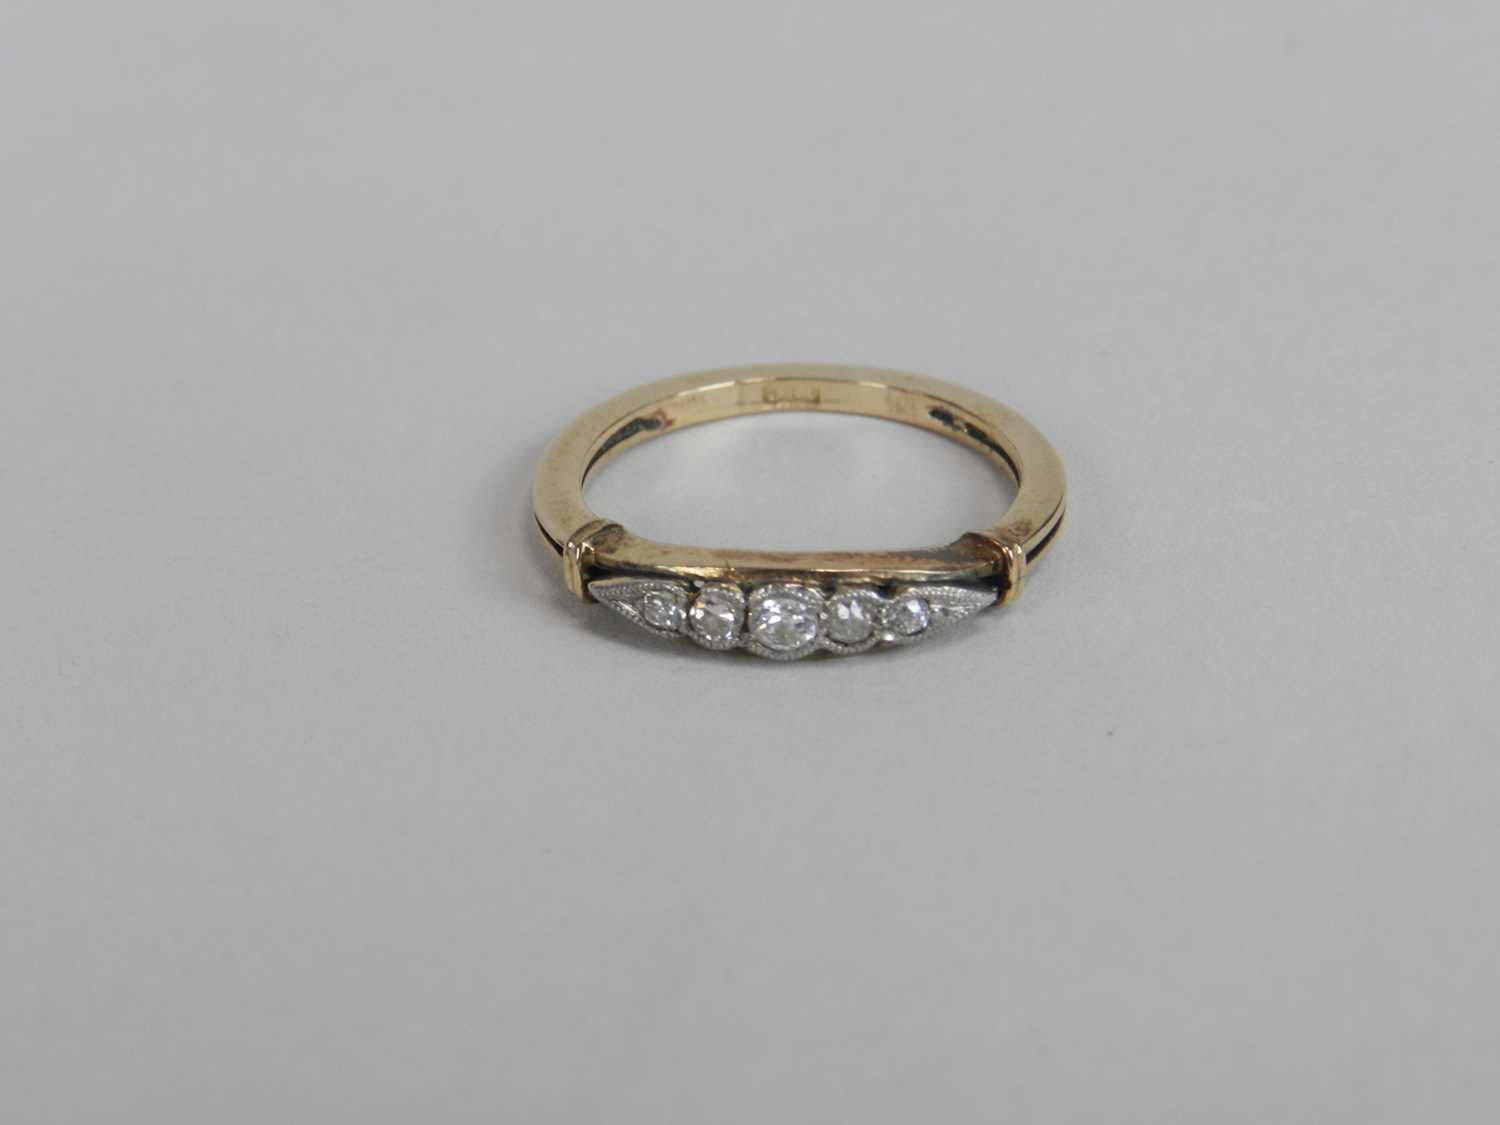 A graduated five stone diamond ring